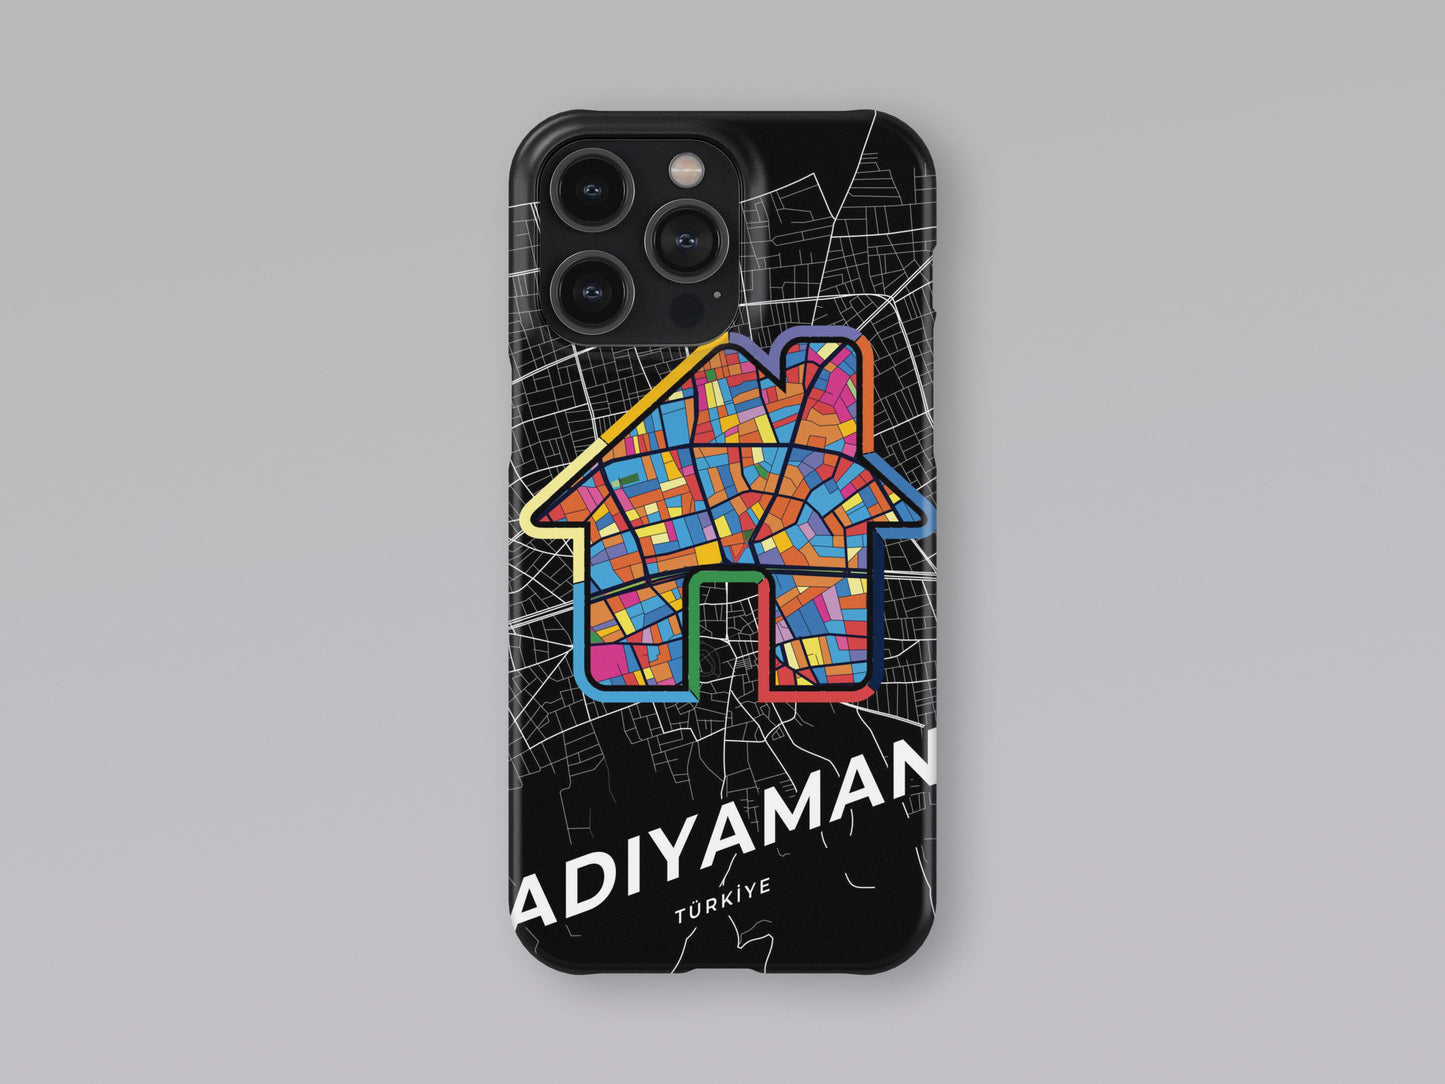 Adıyaman Turkey slim phone case with colorful icon. Birthday, wedding or housewarming gift. Couple match cases. 3